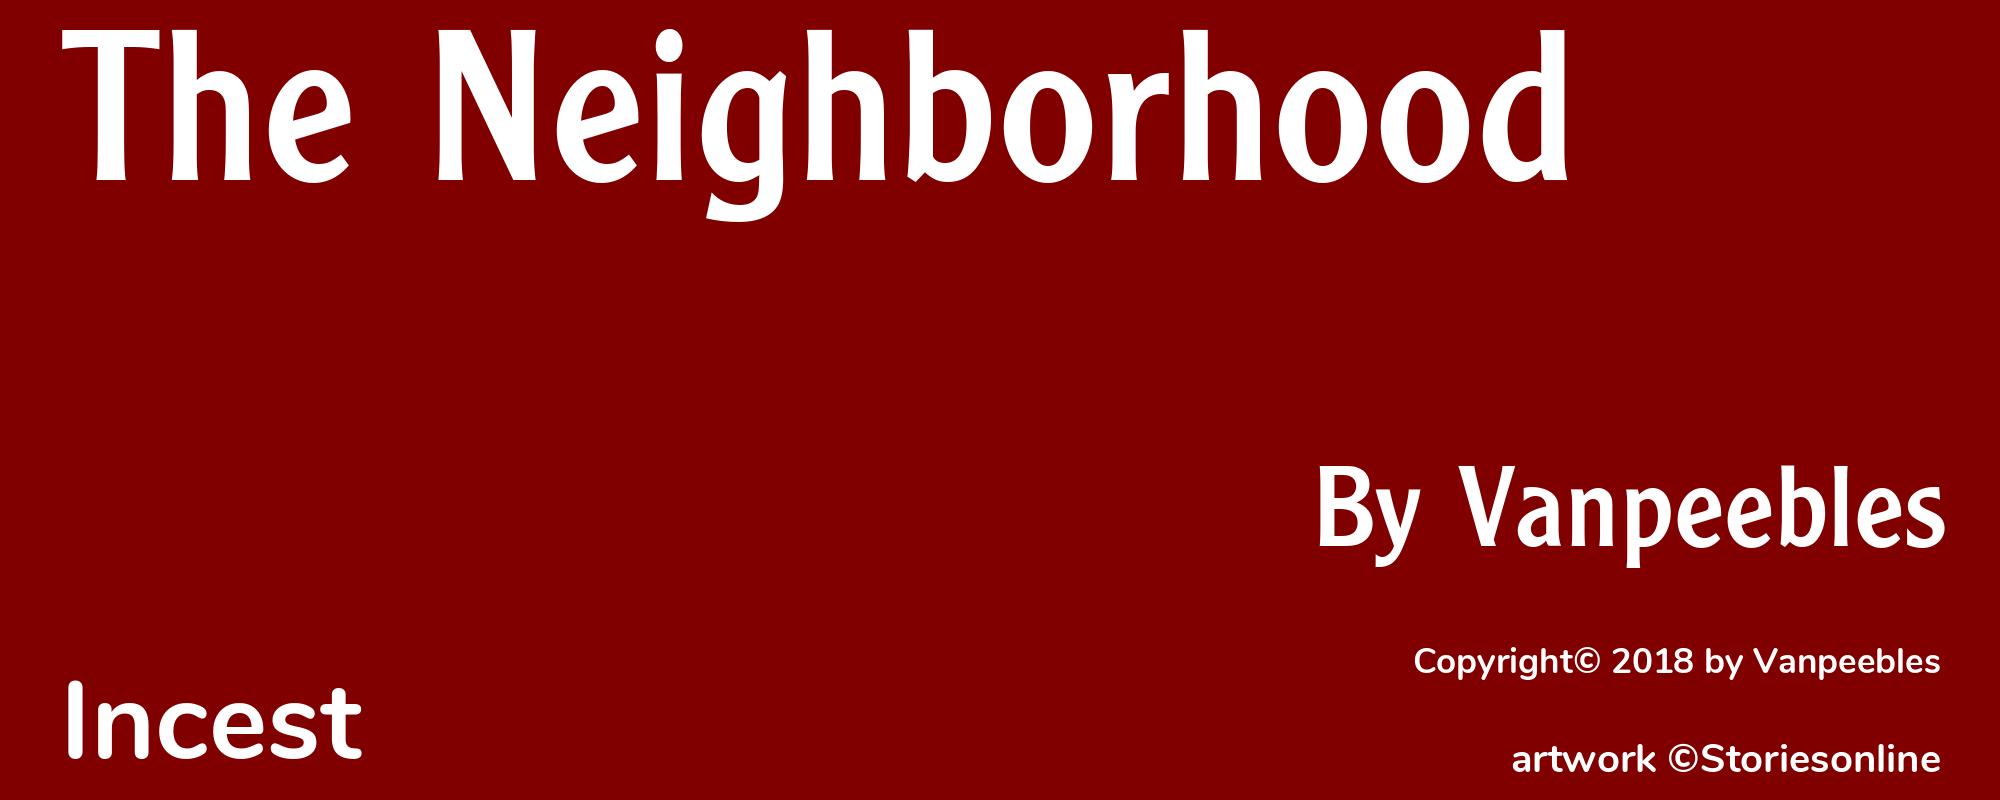 The Neighborhood - Cover